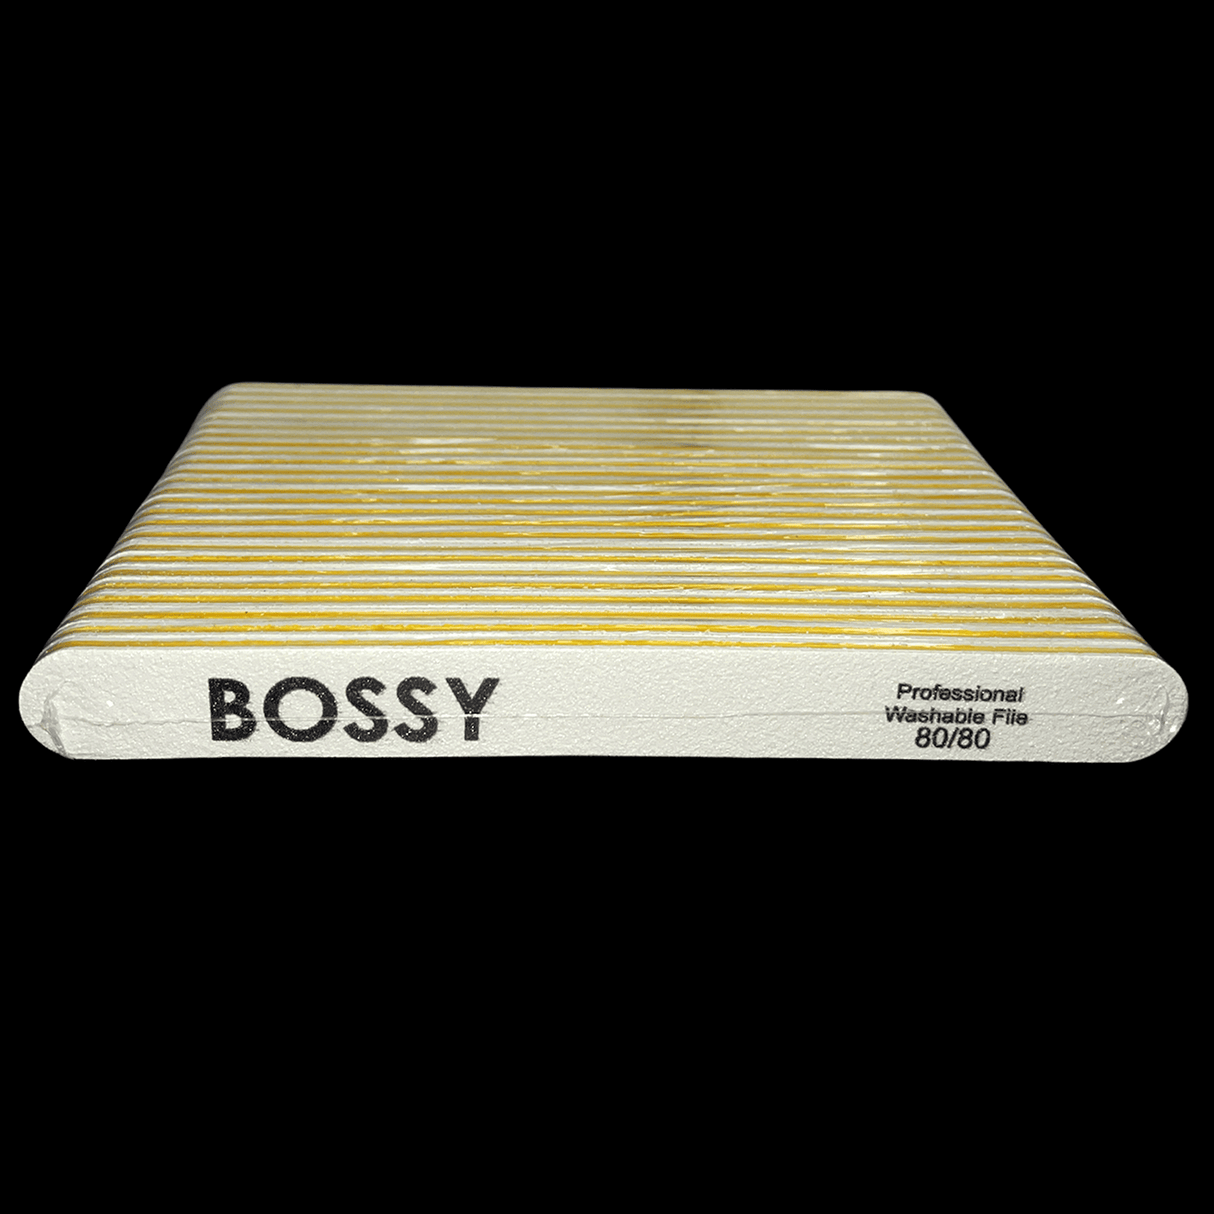 BOSSY Washable File Regular Oval WHITE (80/80)